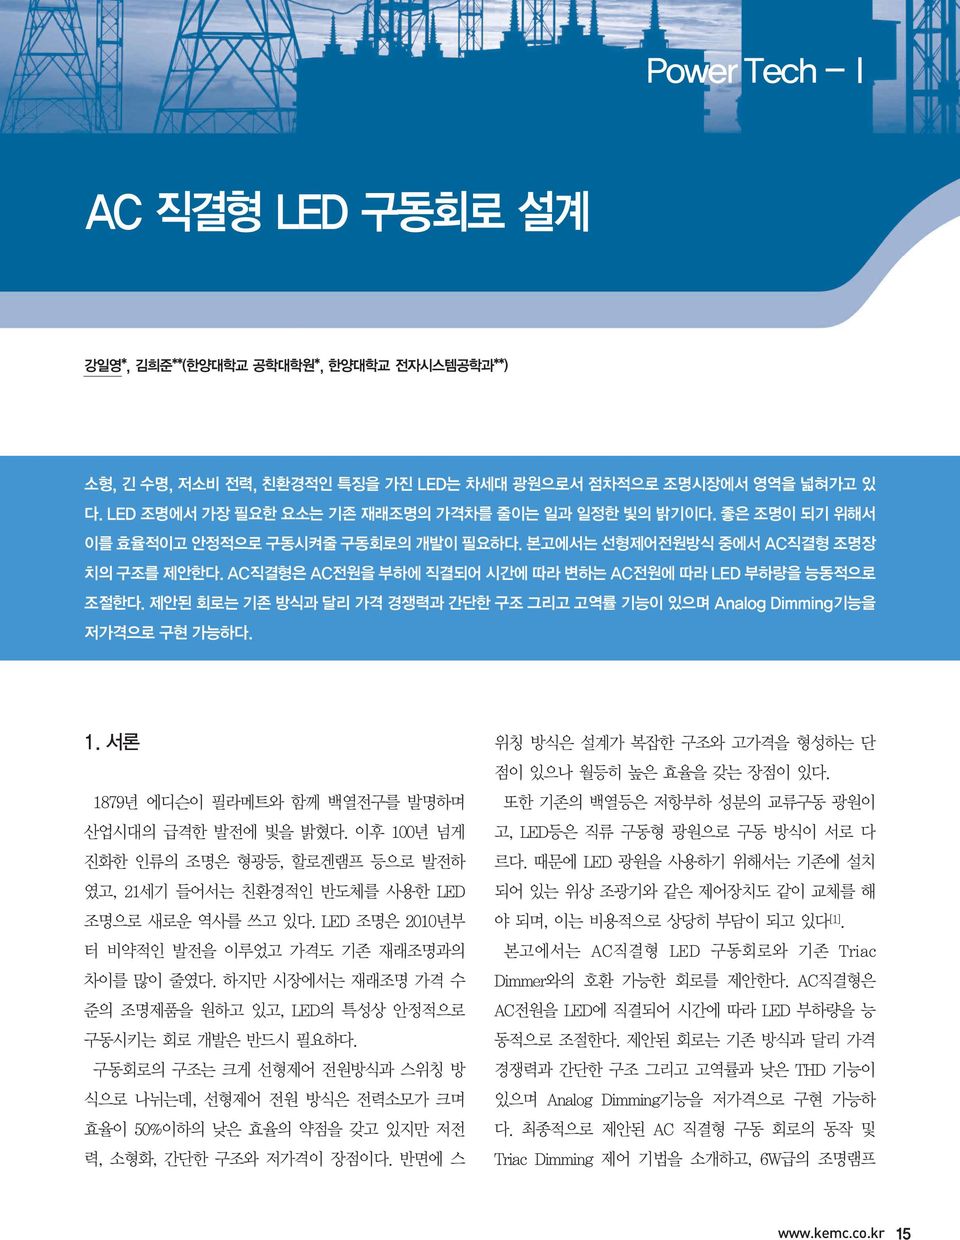 AC직결형은 AC전원을 부하에 직결되어 시간에 따라 변하는 AC전원에 따라 LED 부하량을 능동적으로 조절한다. 제안된 회로는 기존 방식과 달리 가격 경쟁력과 간단한 구조 그리고 고역률 기능이 있으며 Analog Dimming기능을 저가격으로 구현 가능하다. 1.